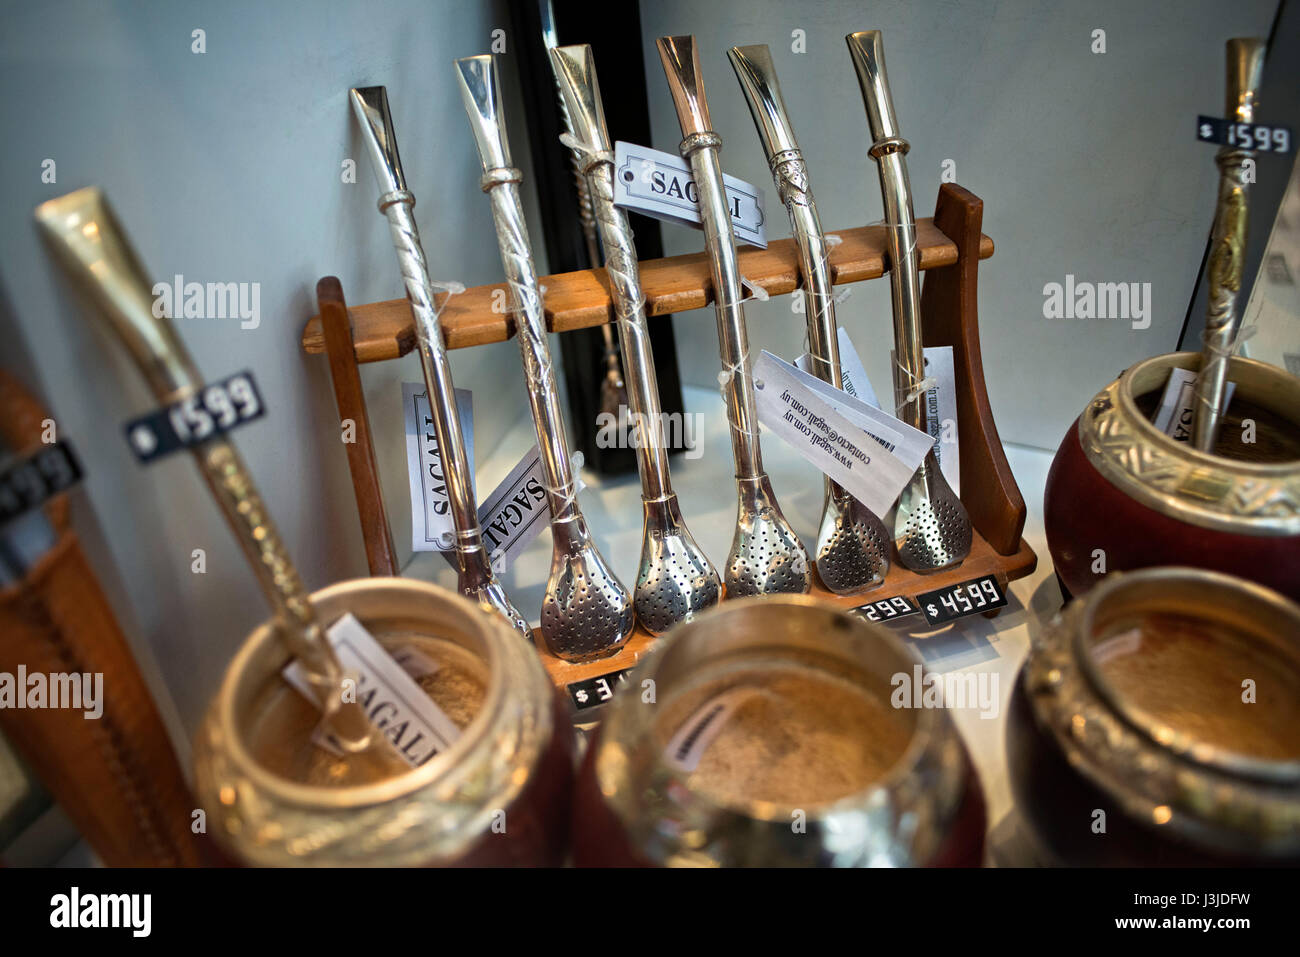 Mate-Becher für Mate Tee, Antiquitätenmarkt, Montevideo, Uruguay,  Südamerika Stockfotografie - Alamy